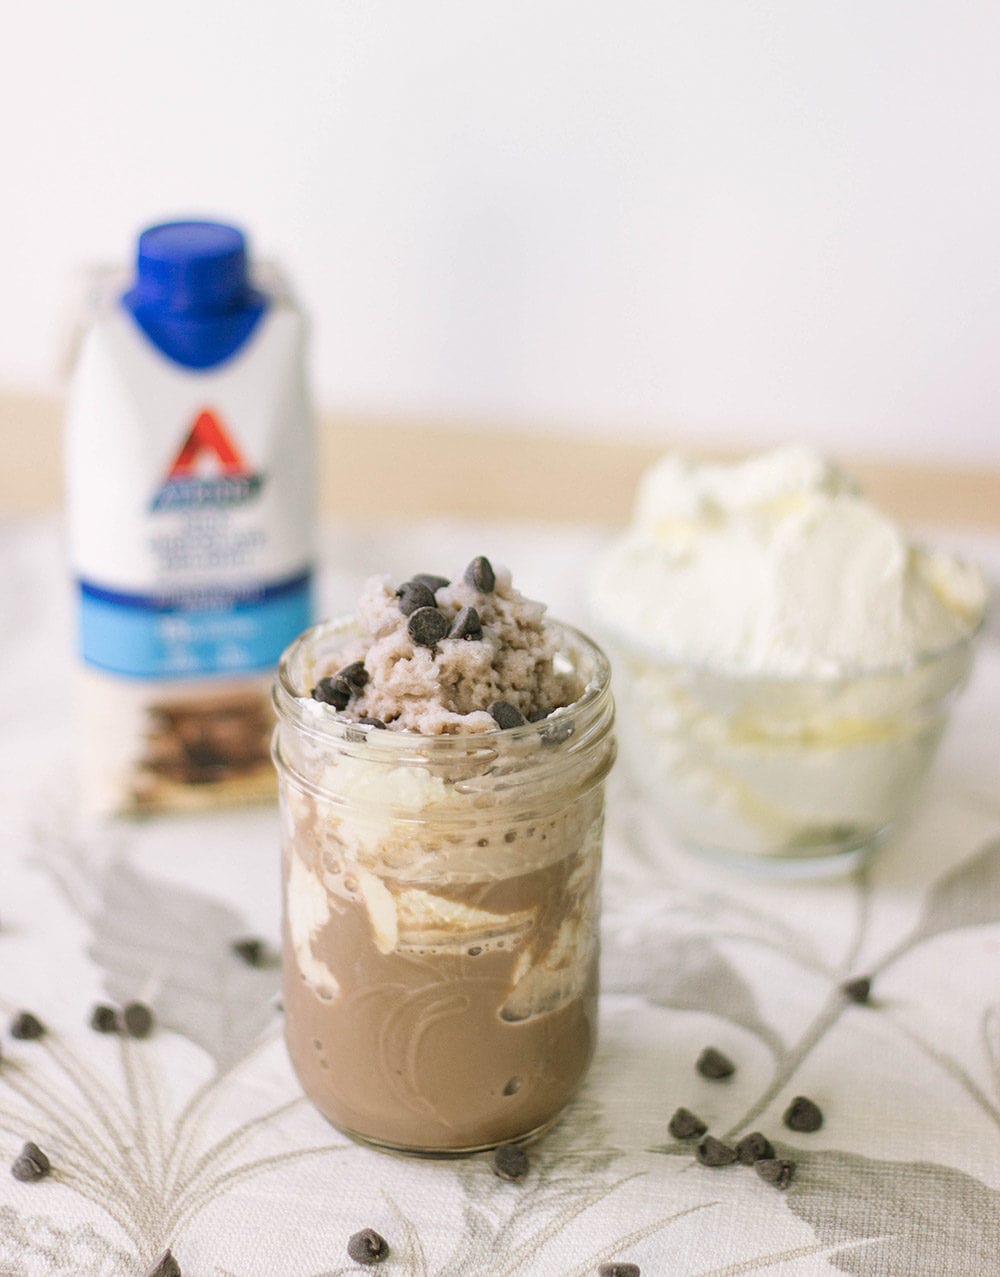 Atkins shake, whipped cream, and jar of chocolate shake